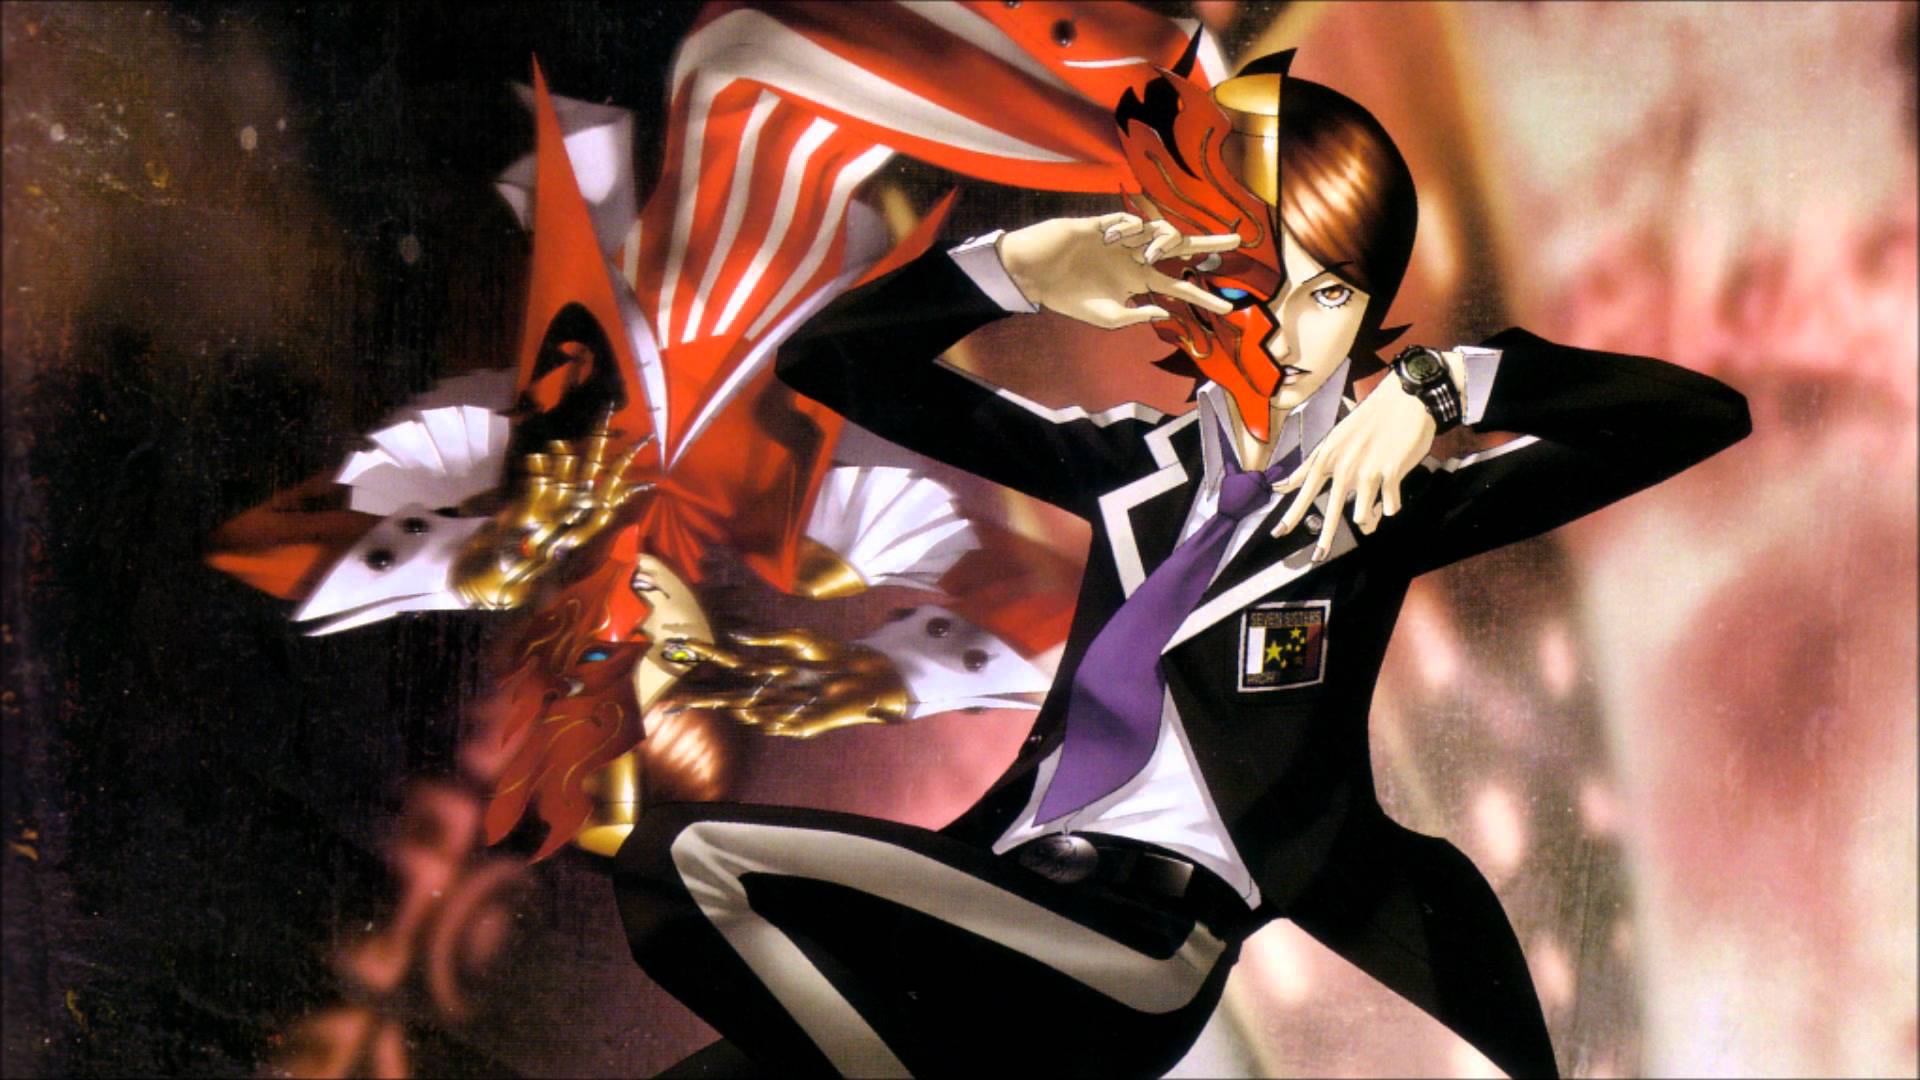 Persona 2 Innocent Sin (PSP): Boss Battle [Extended]